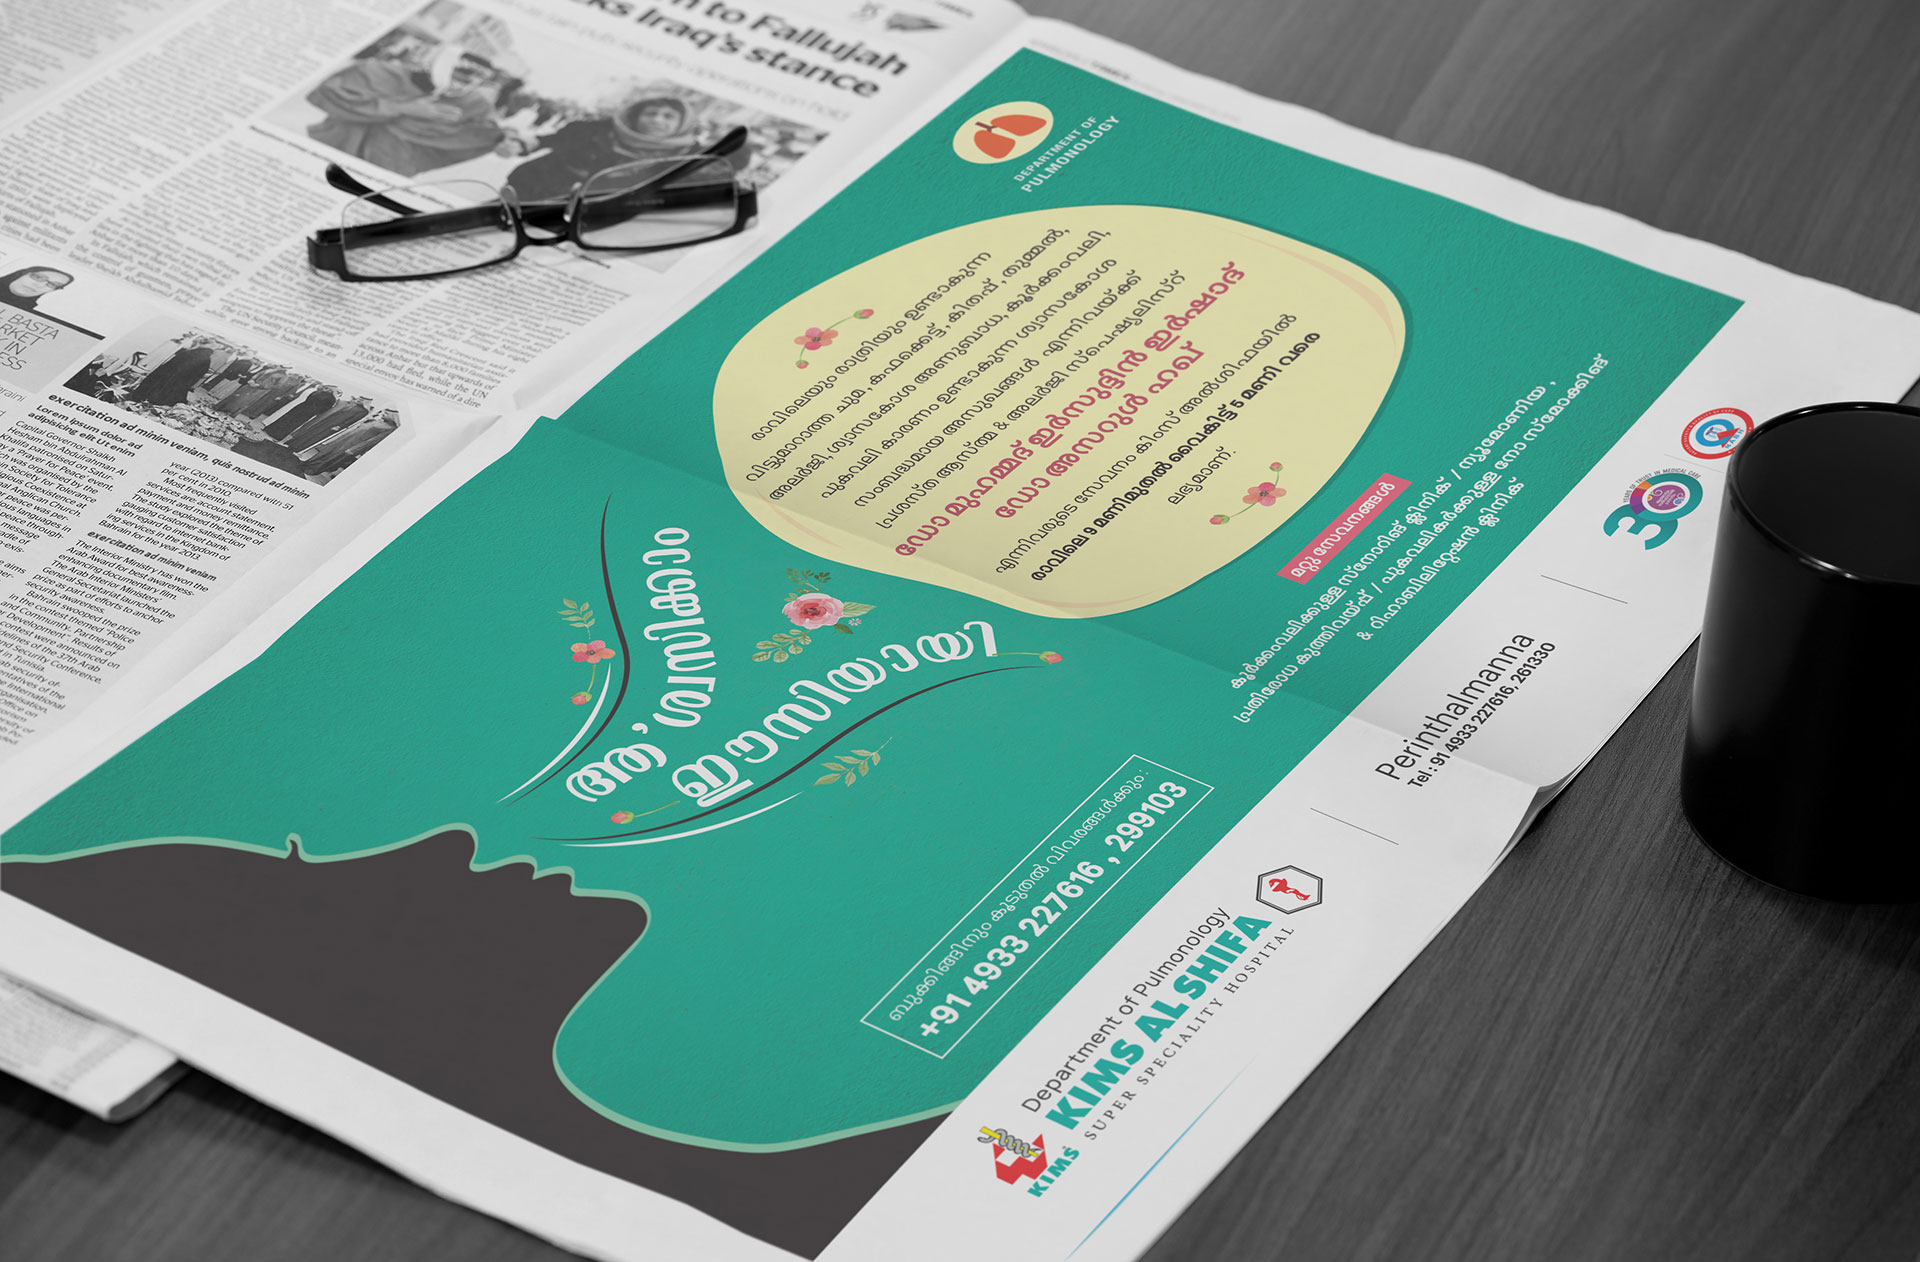 KIMS Al Shifa Hospital - Breath easy advertisement on newspaper